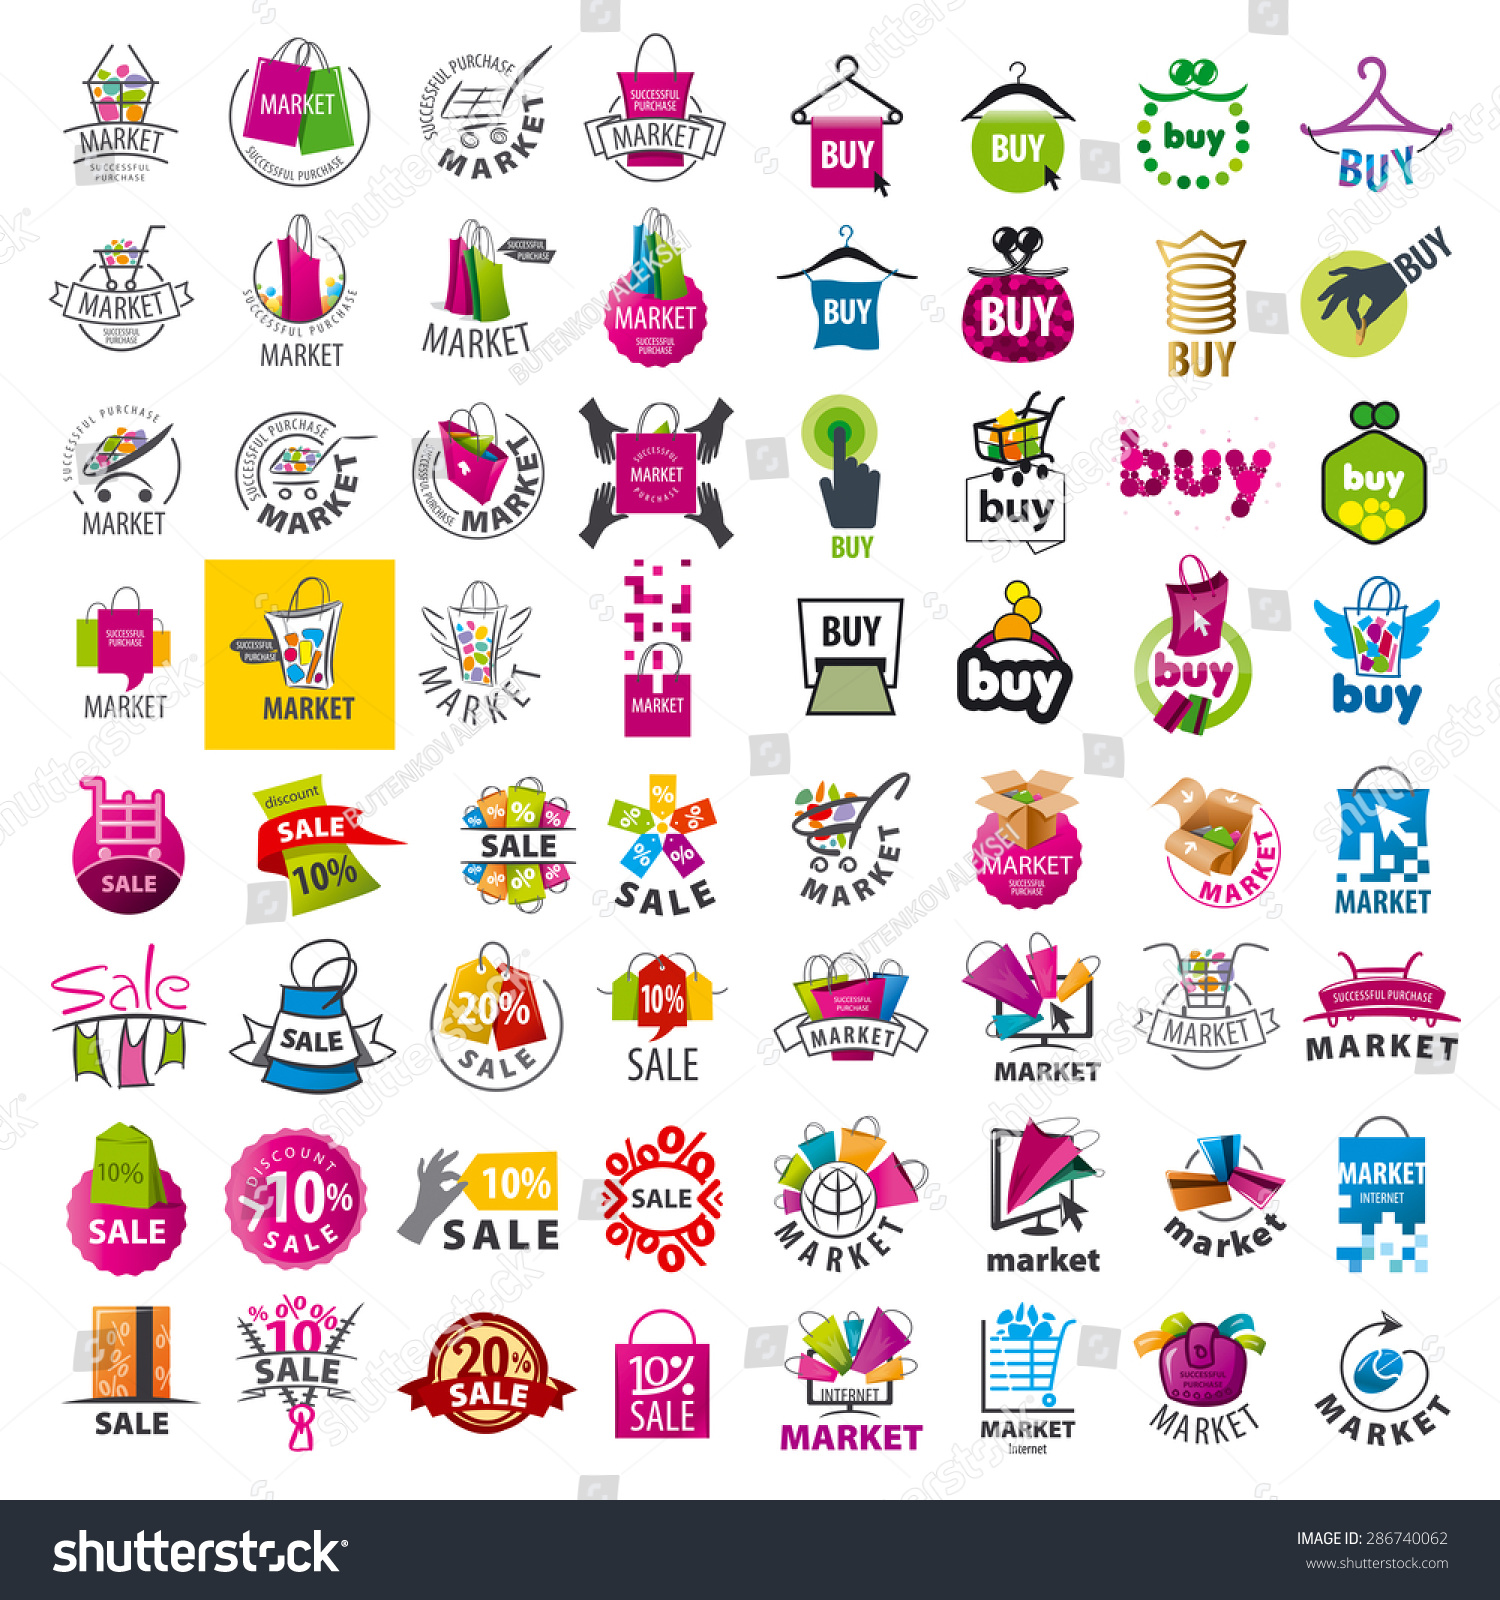 224,047 Bags logo Images, Stock Photos & Vectors | Shutterstock